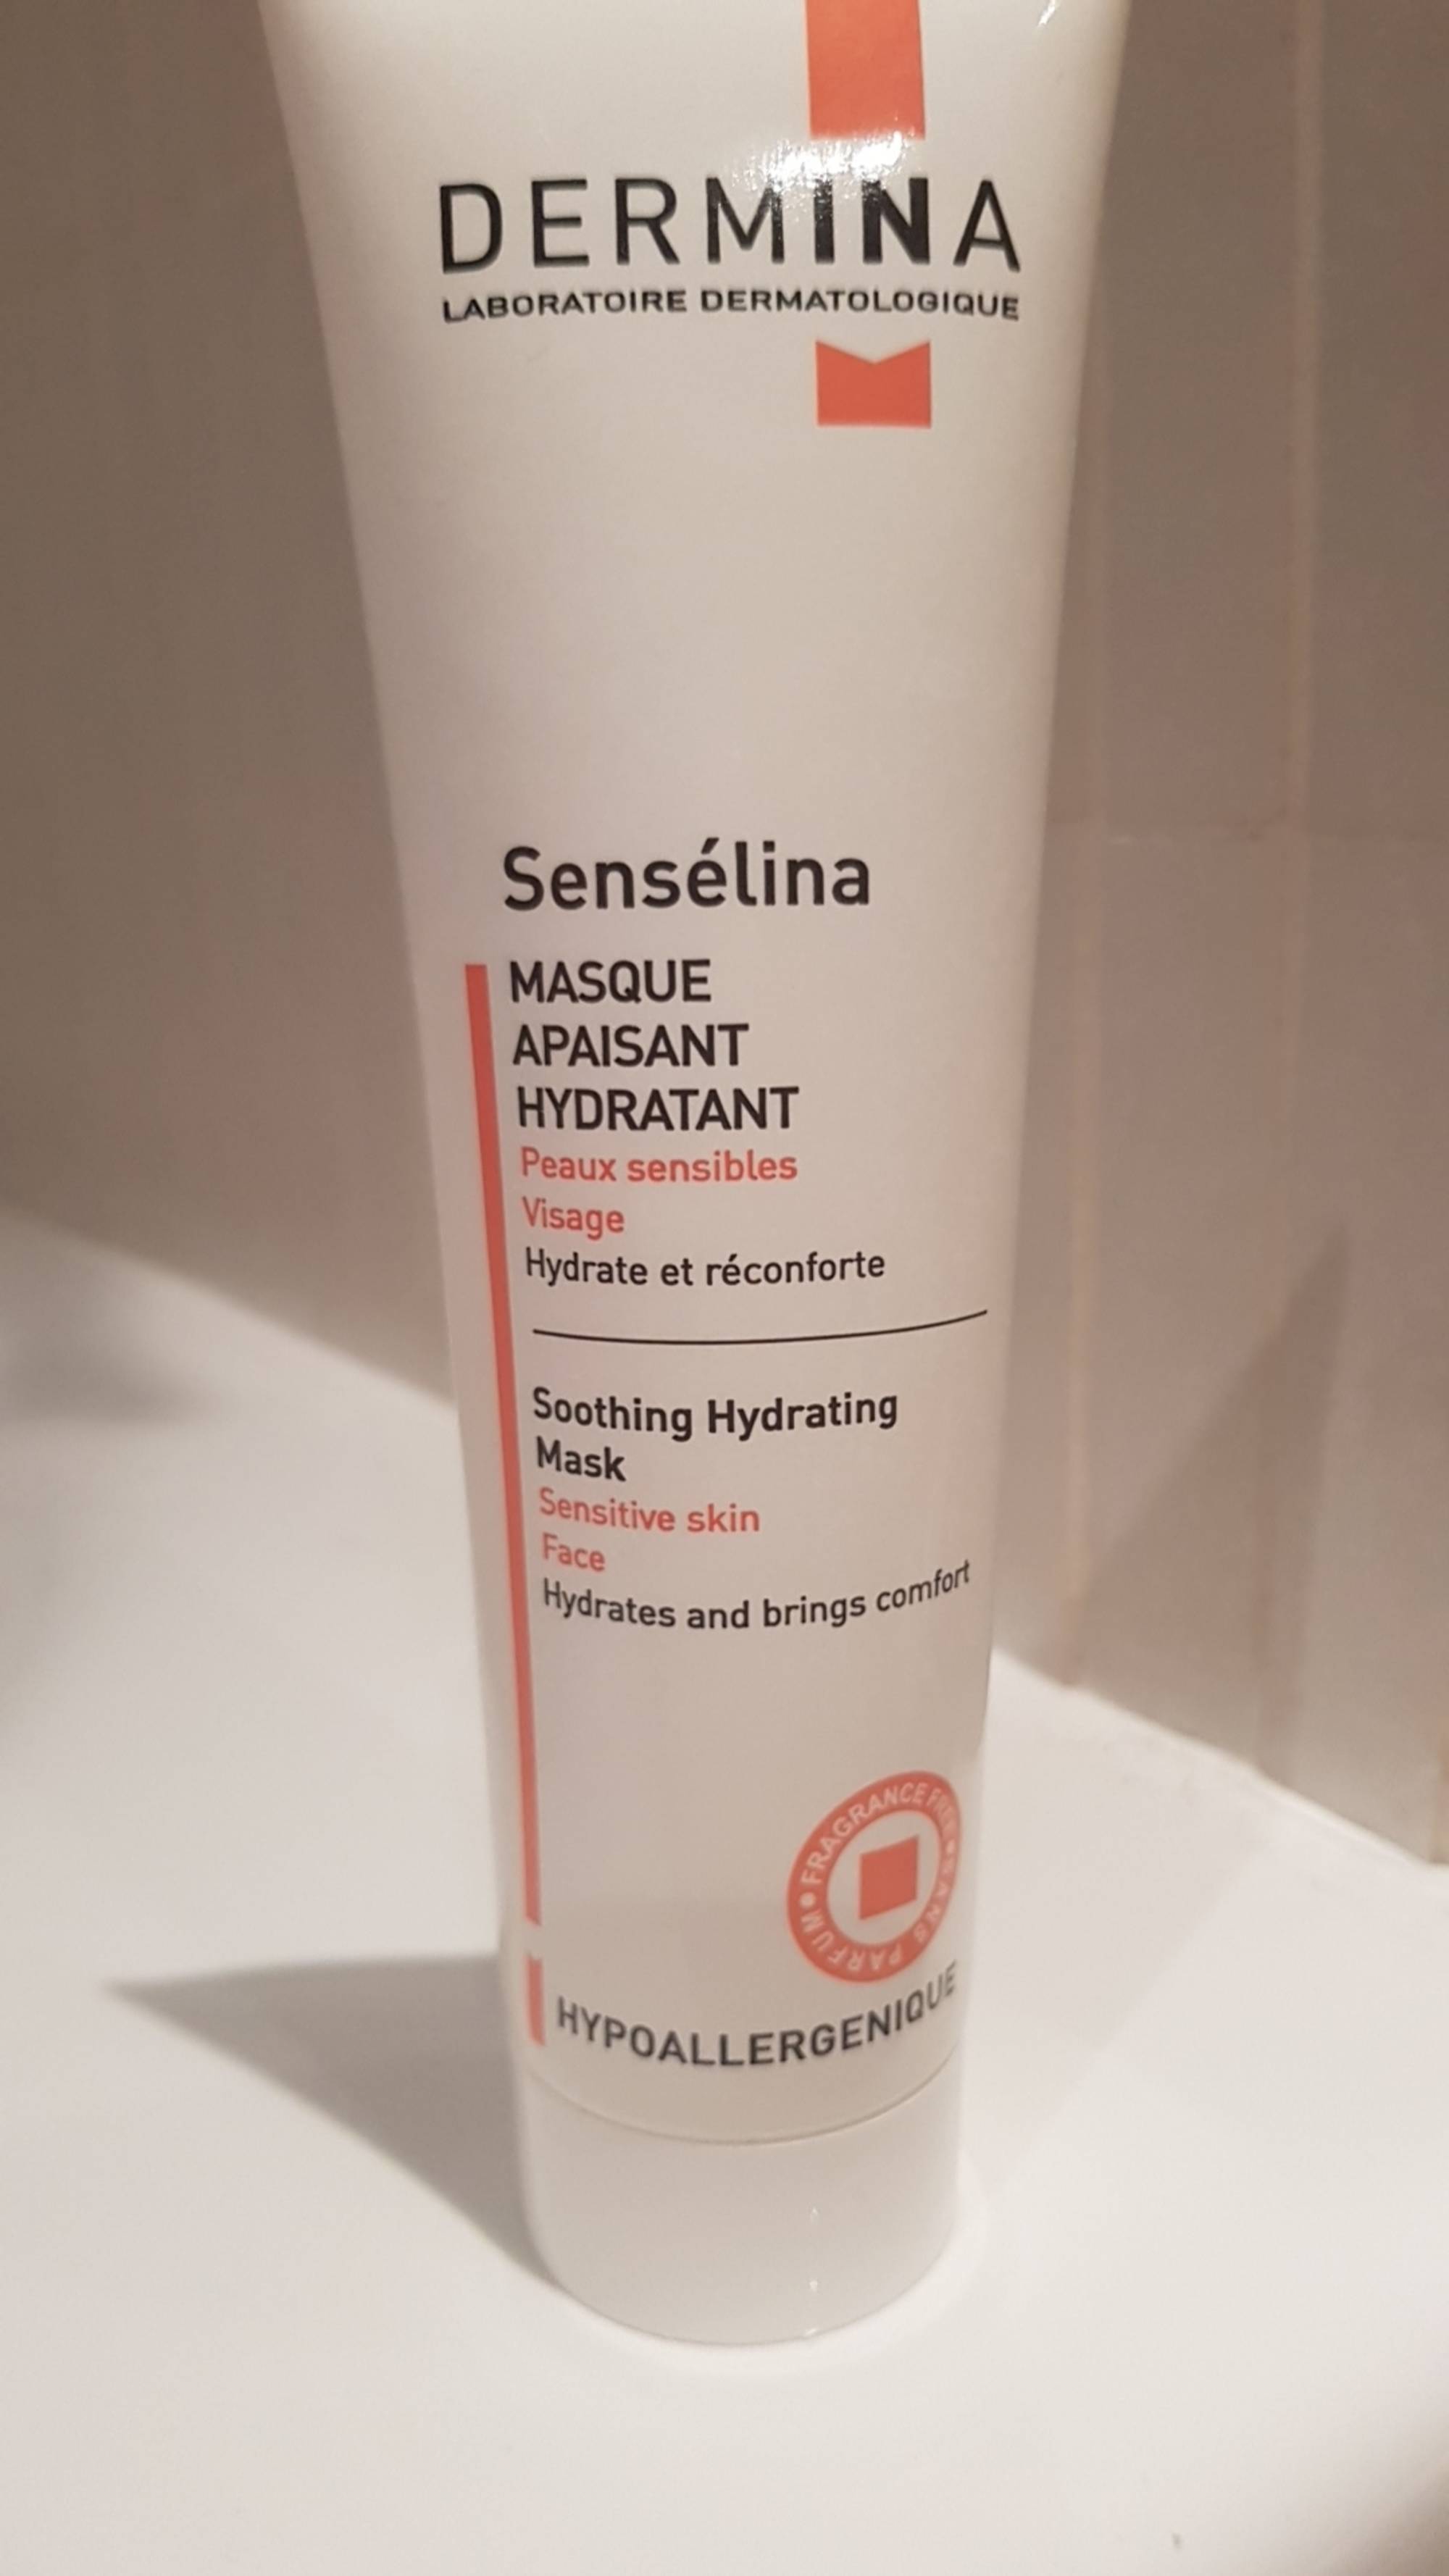 DERMINA - Sensélina - Masque apaisant hydratant 